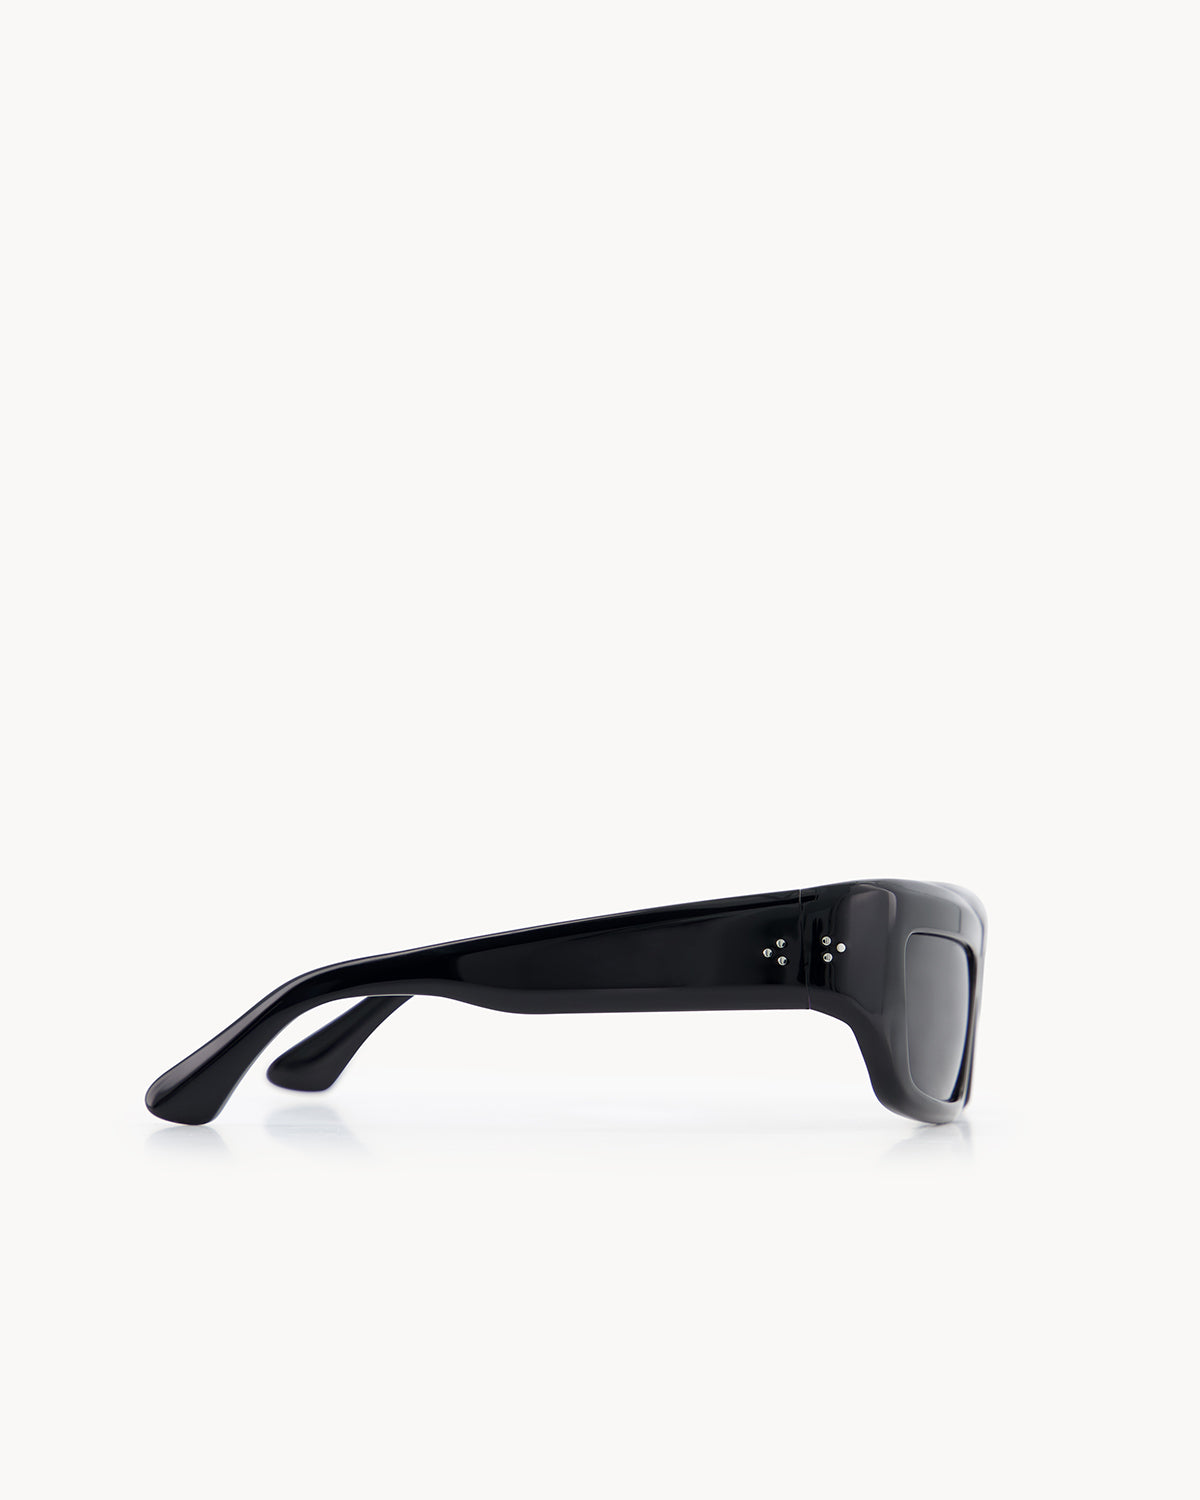 Port Tanger Niyyah Sunglasses in Black Acetate and Black Lenses 4